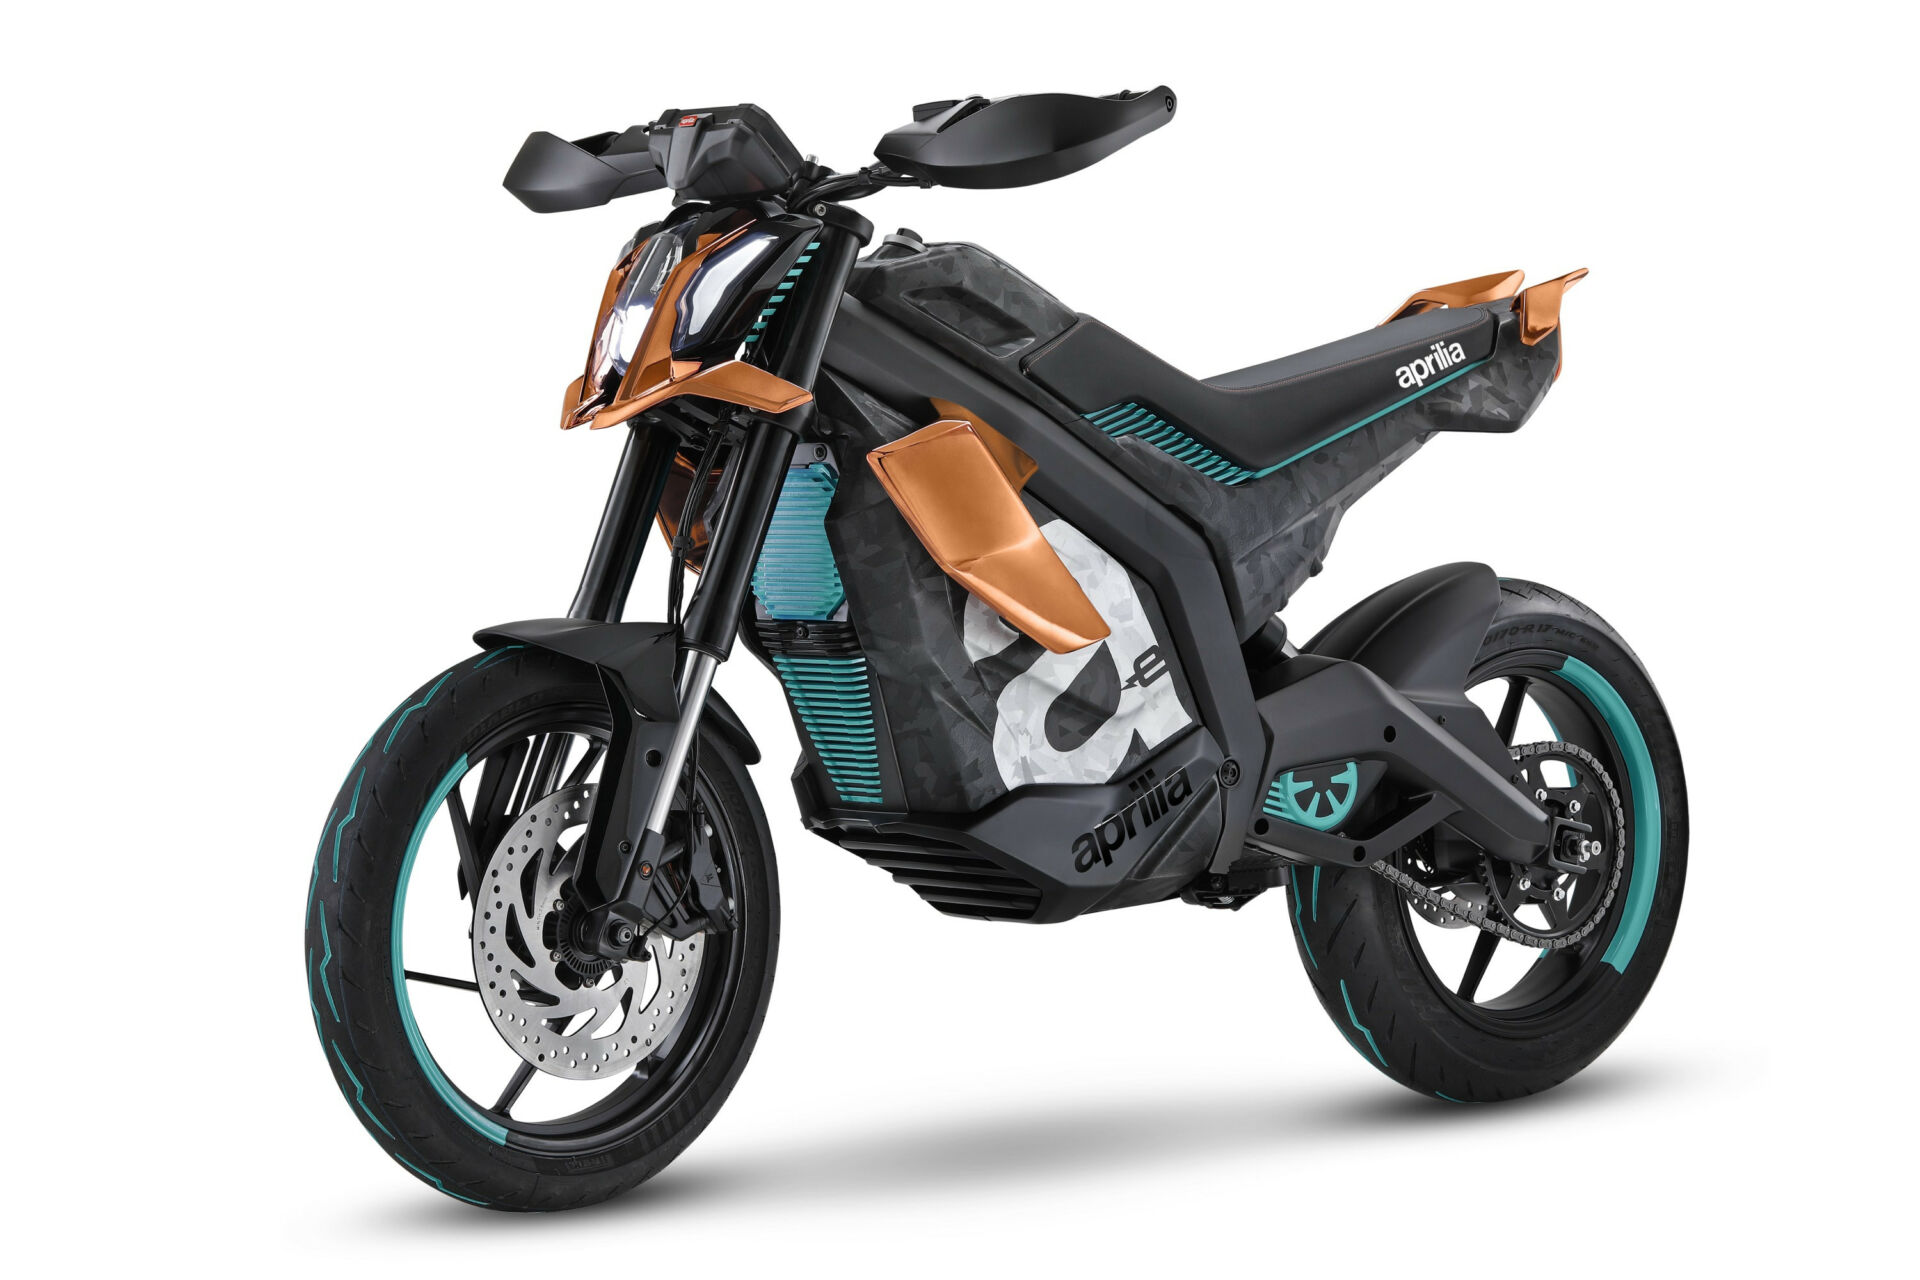 The Aprilia ELECTRICa electric motorcycle designed for young riders. Photo courtesy Aprilia.